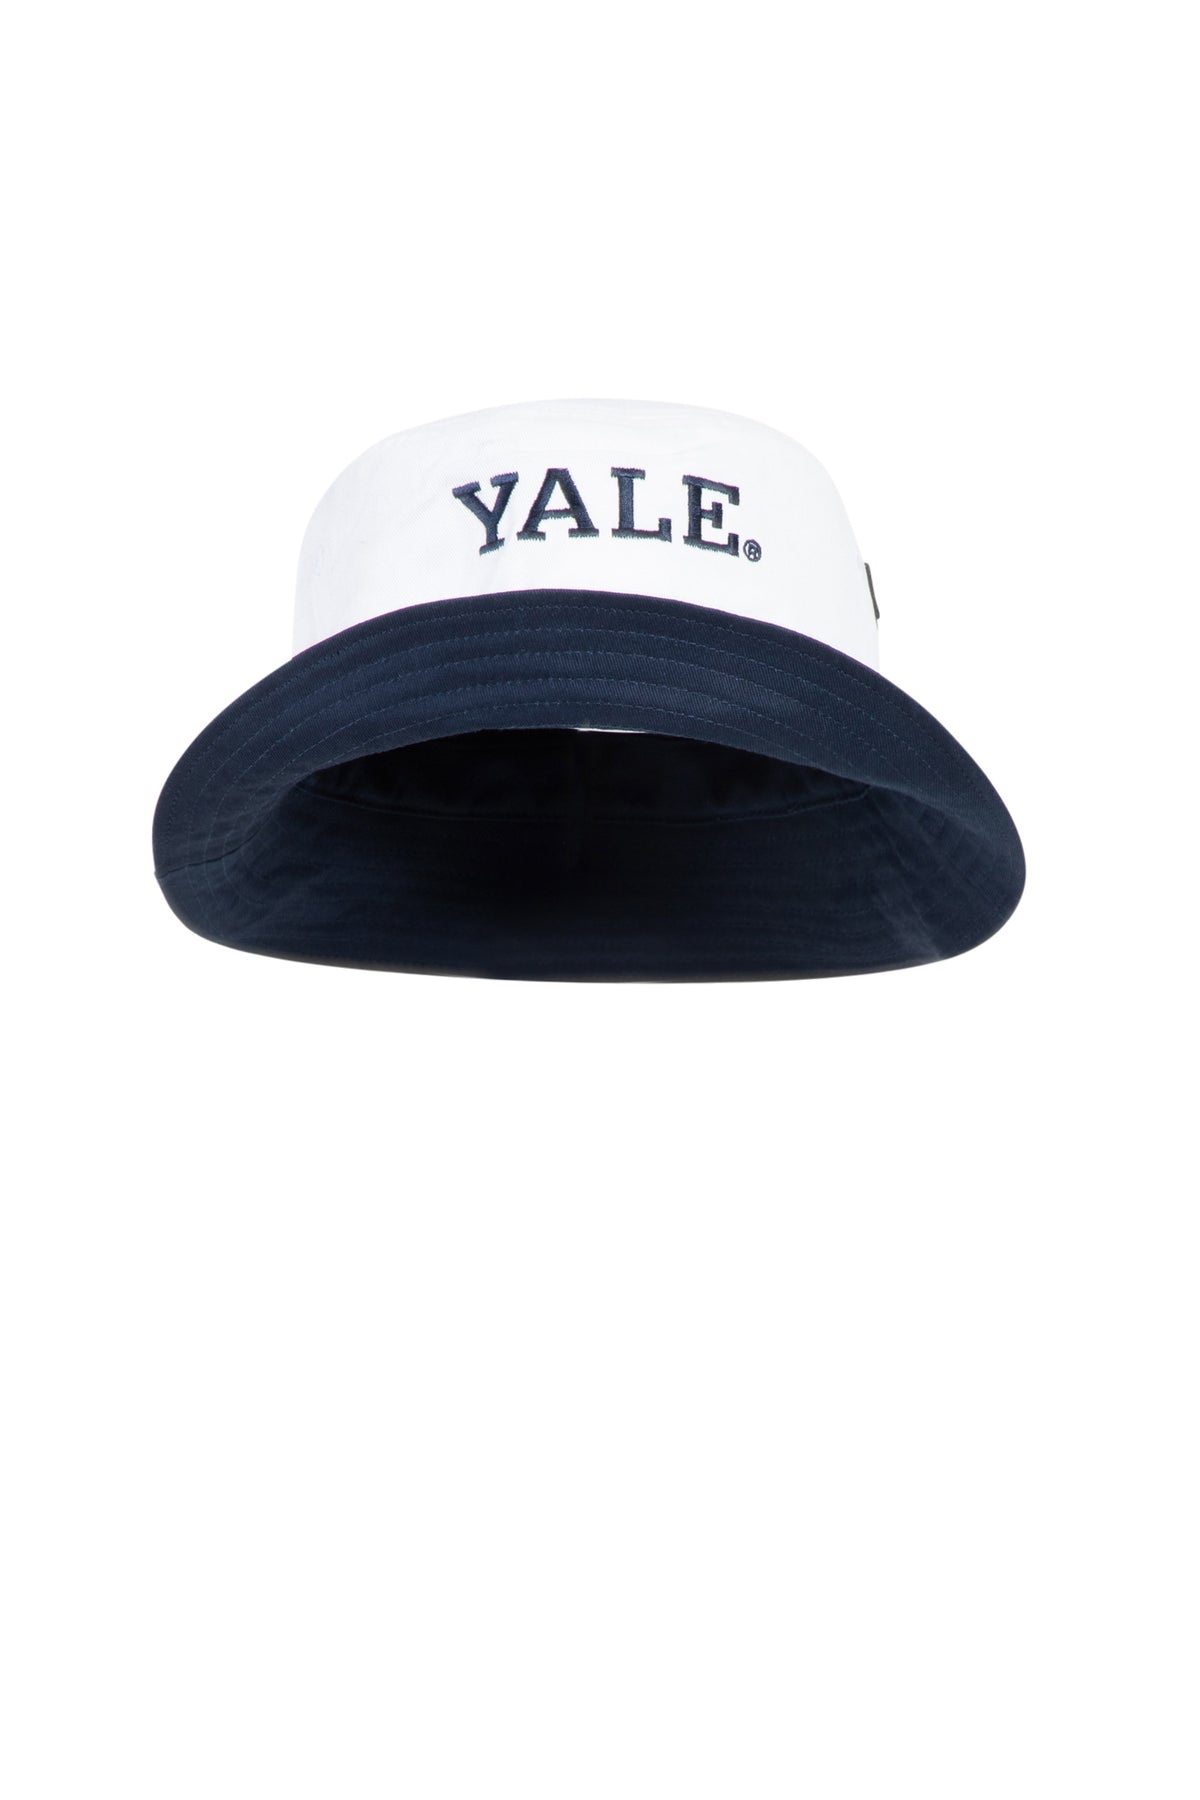 Yale University Reversible Bucket Hat